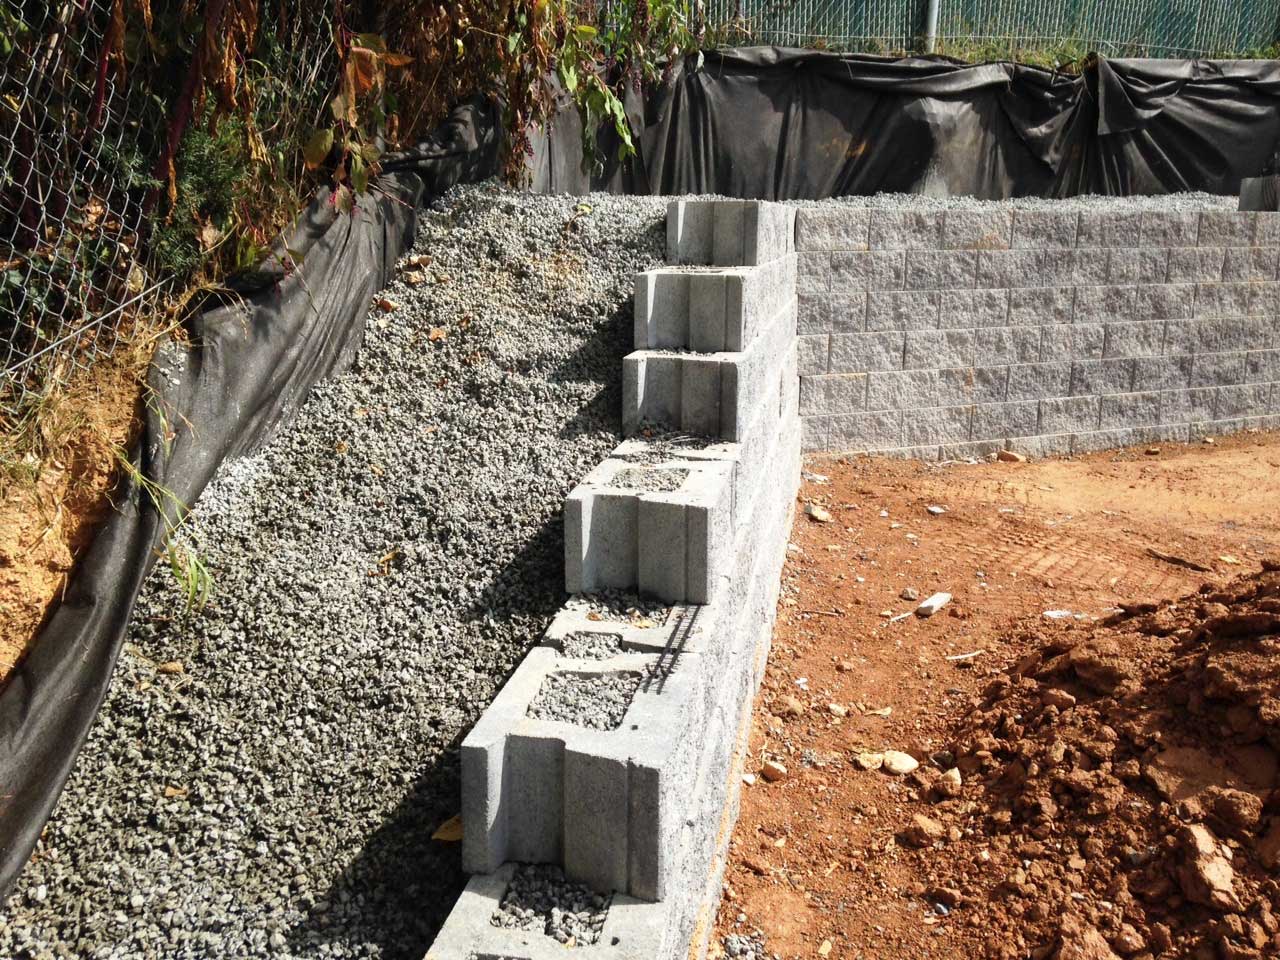 Concrete Block Retaining Walls How To Build A Cinder Block Retaining